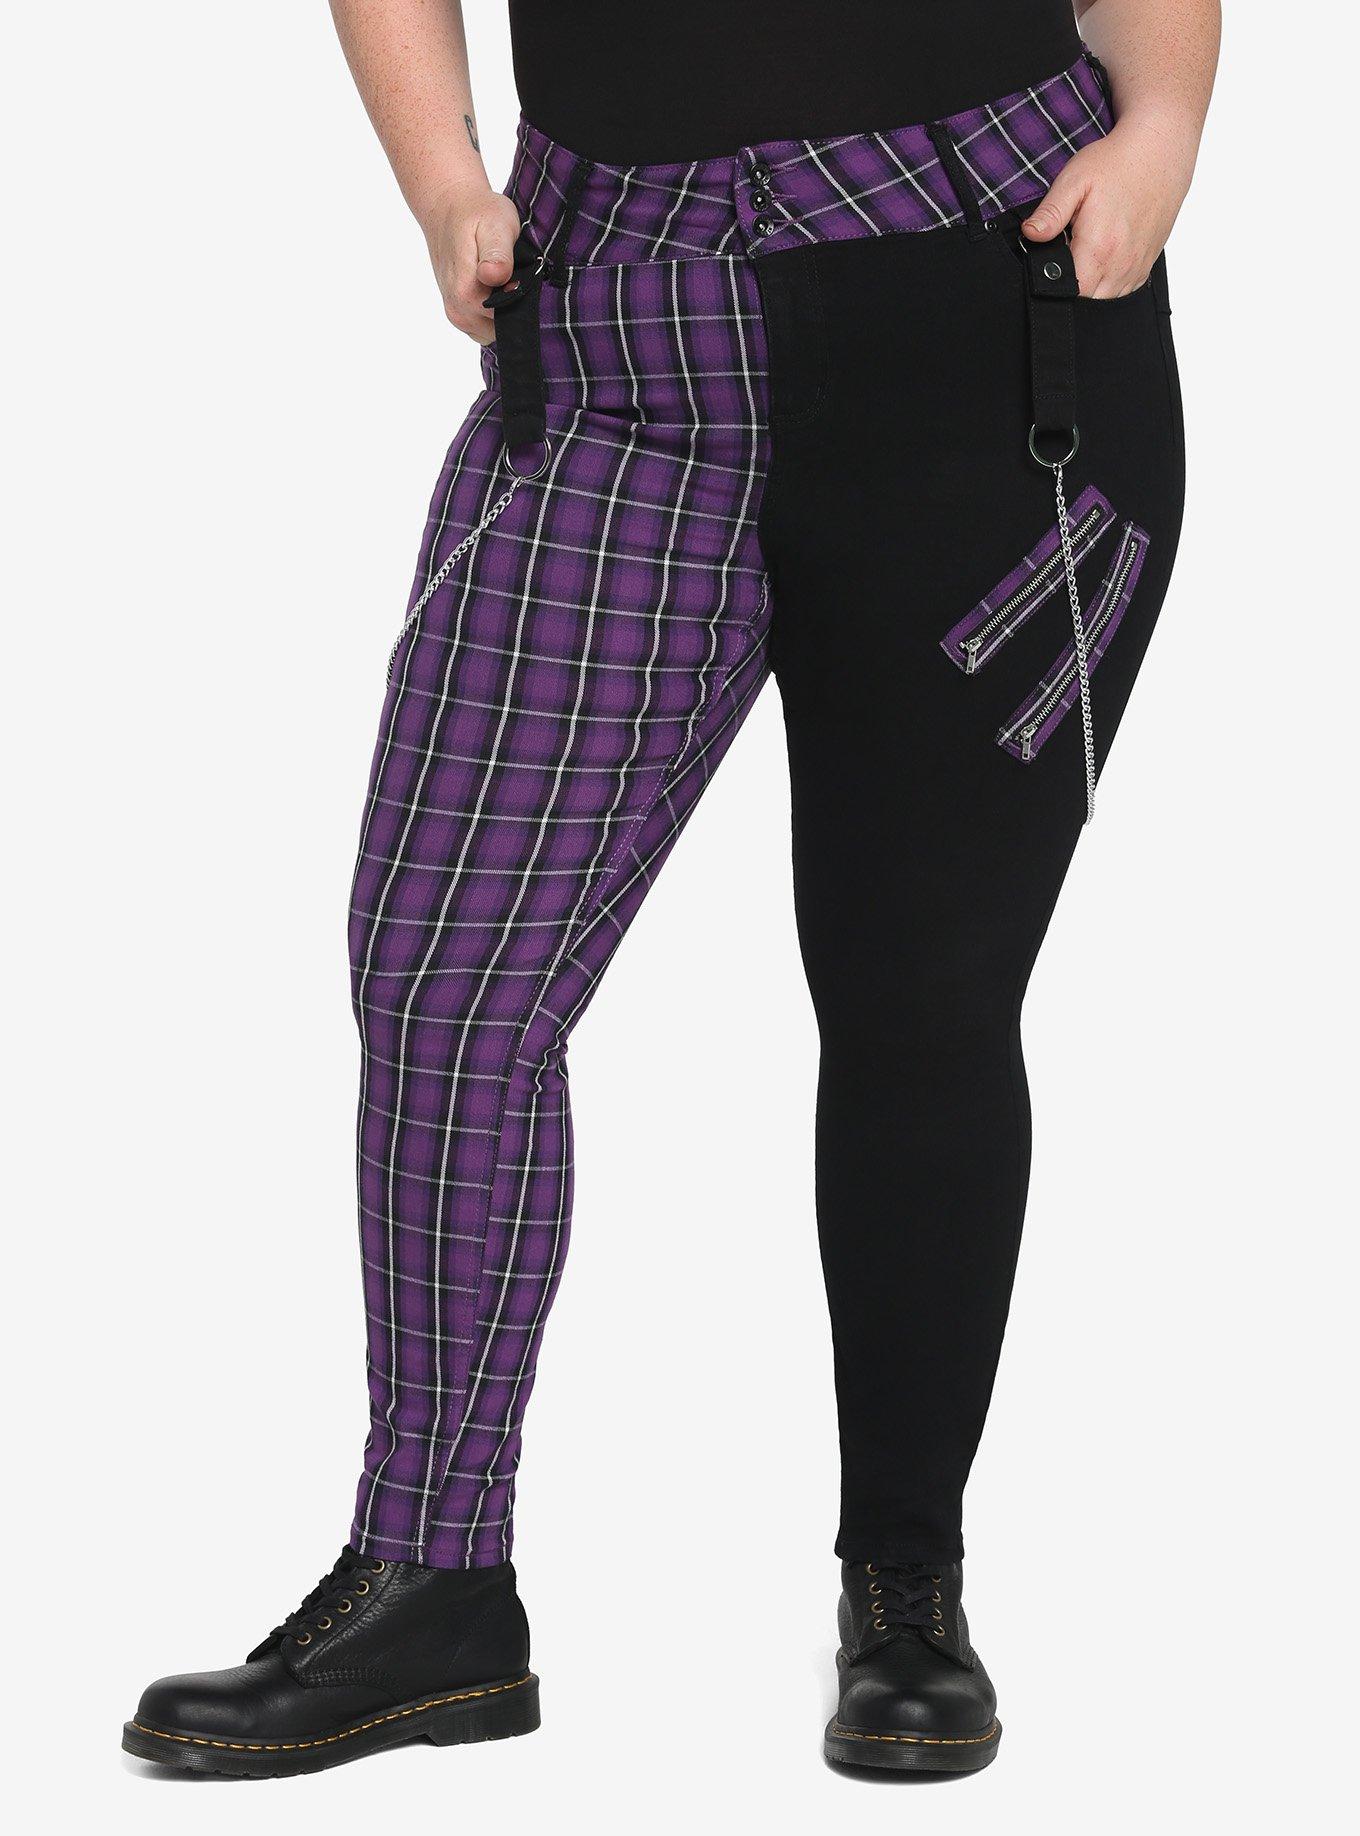 Black & Purple Plaid Split Super Skinny Jeans Plus Size